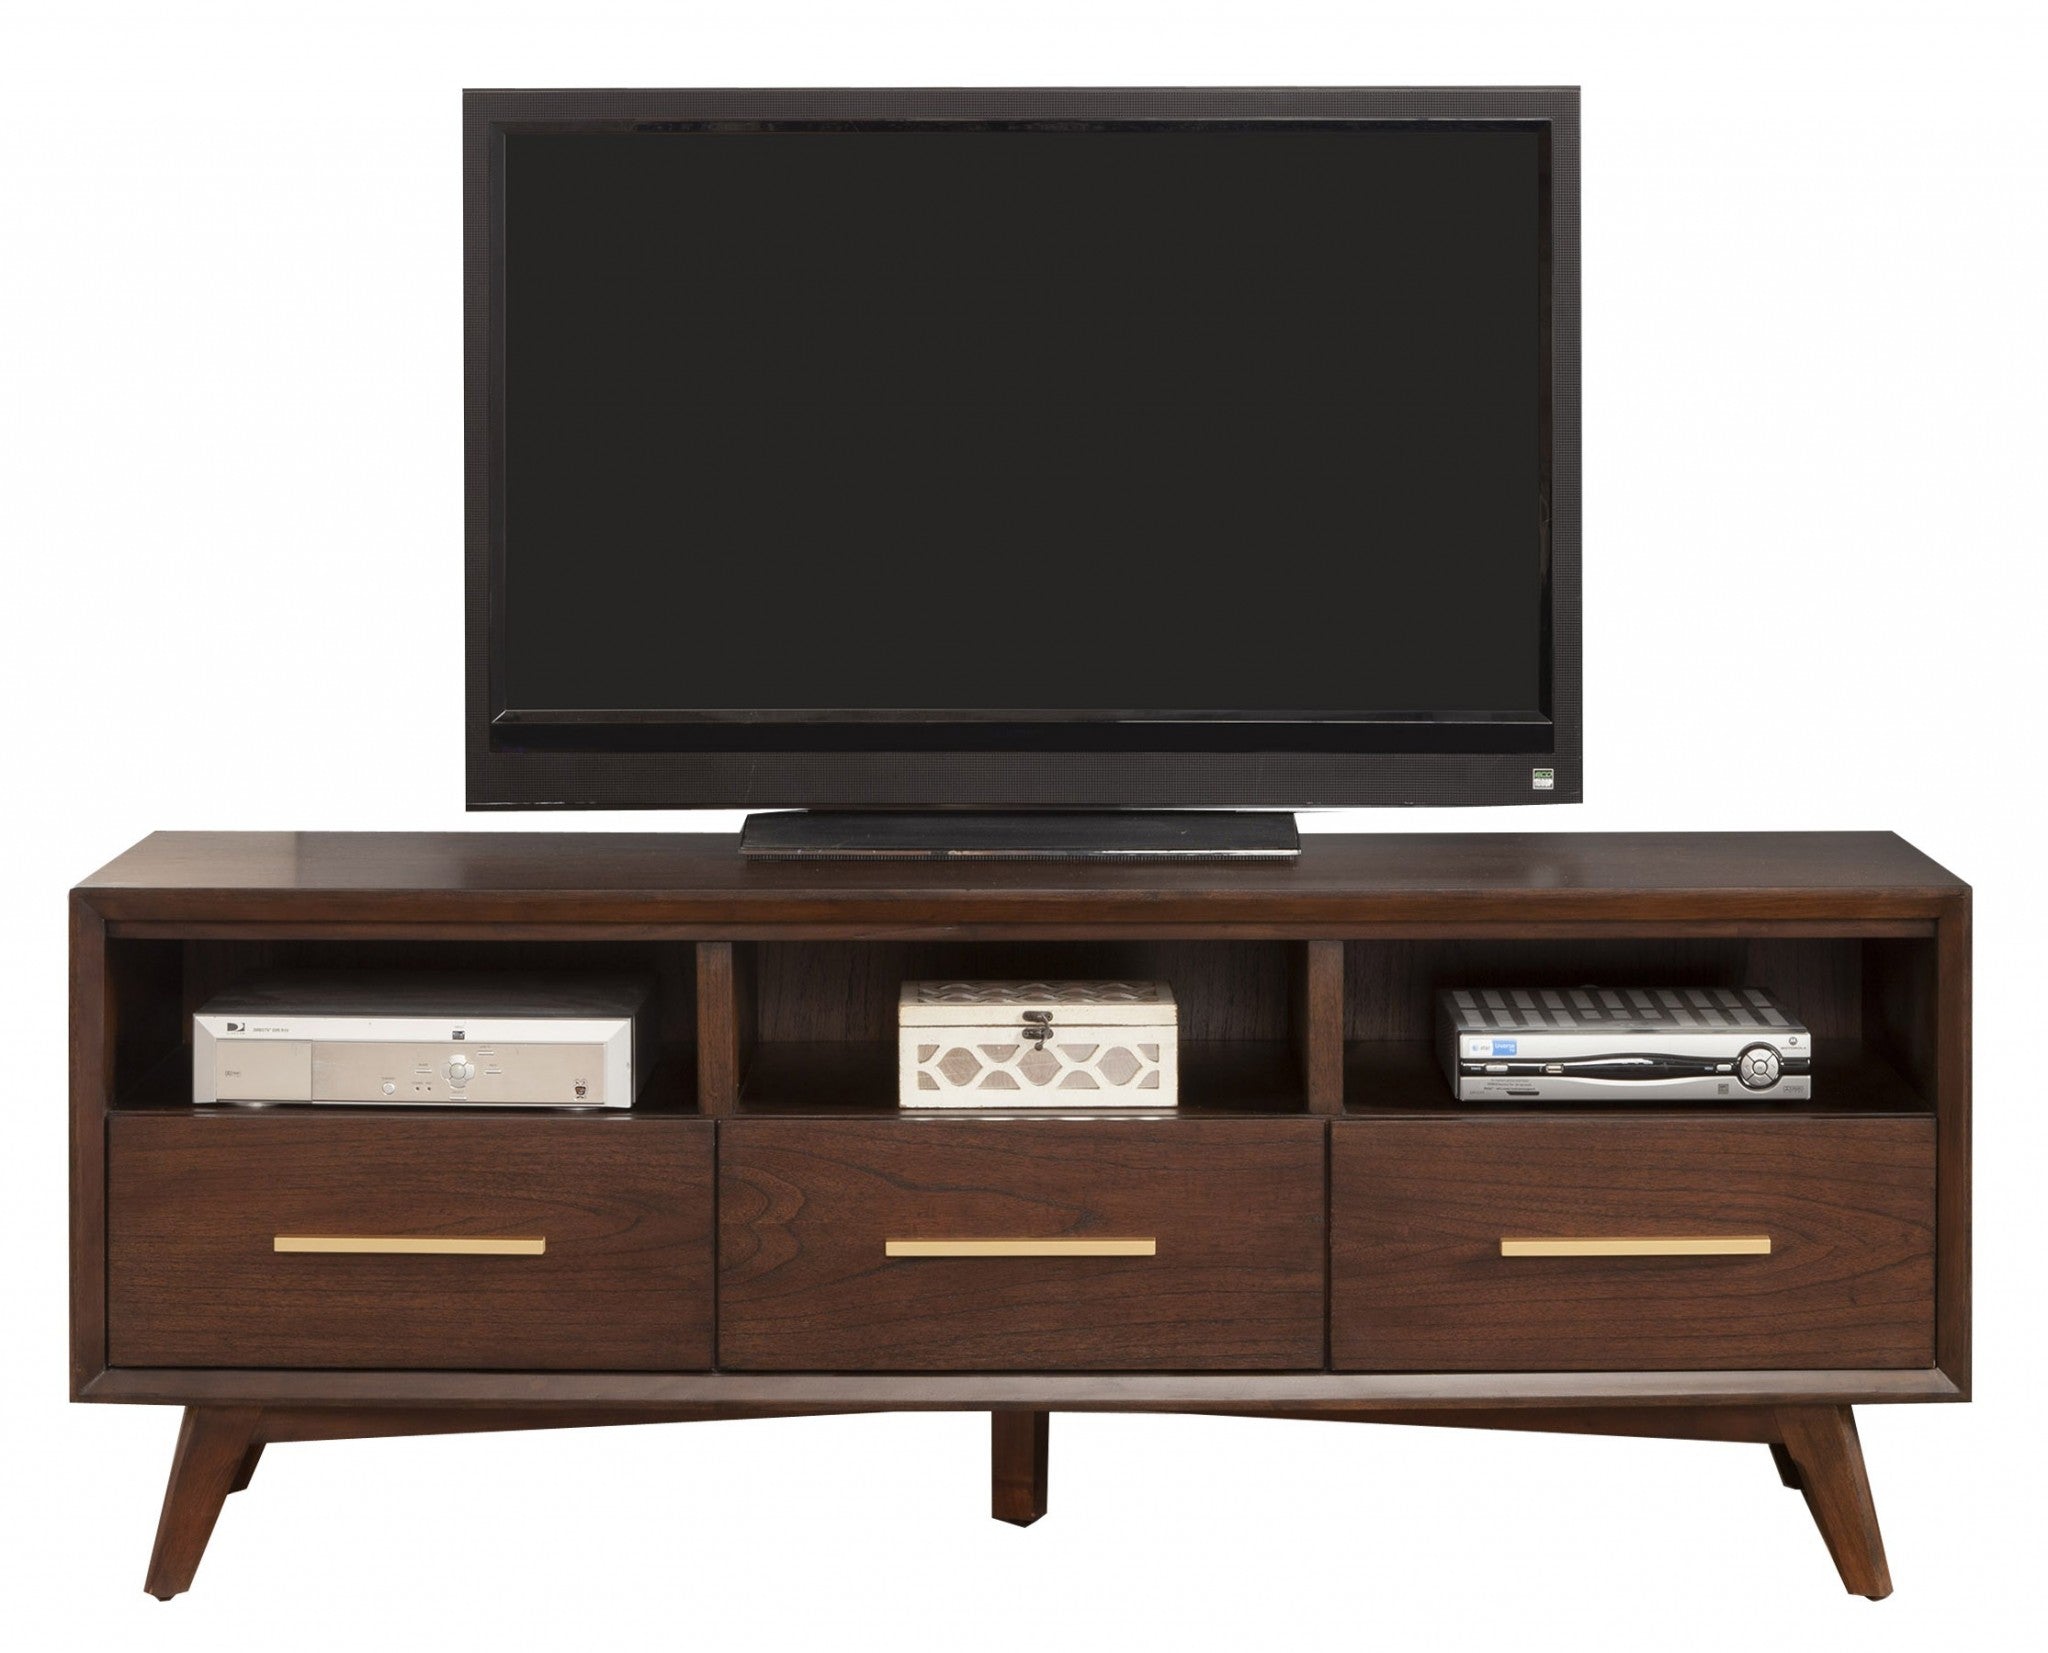 64" Brown Mahogany Solids & Veneer Open shelving TV Stand